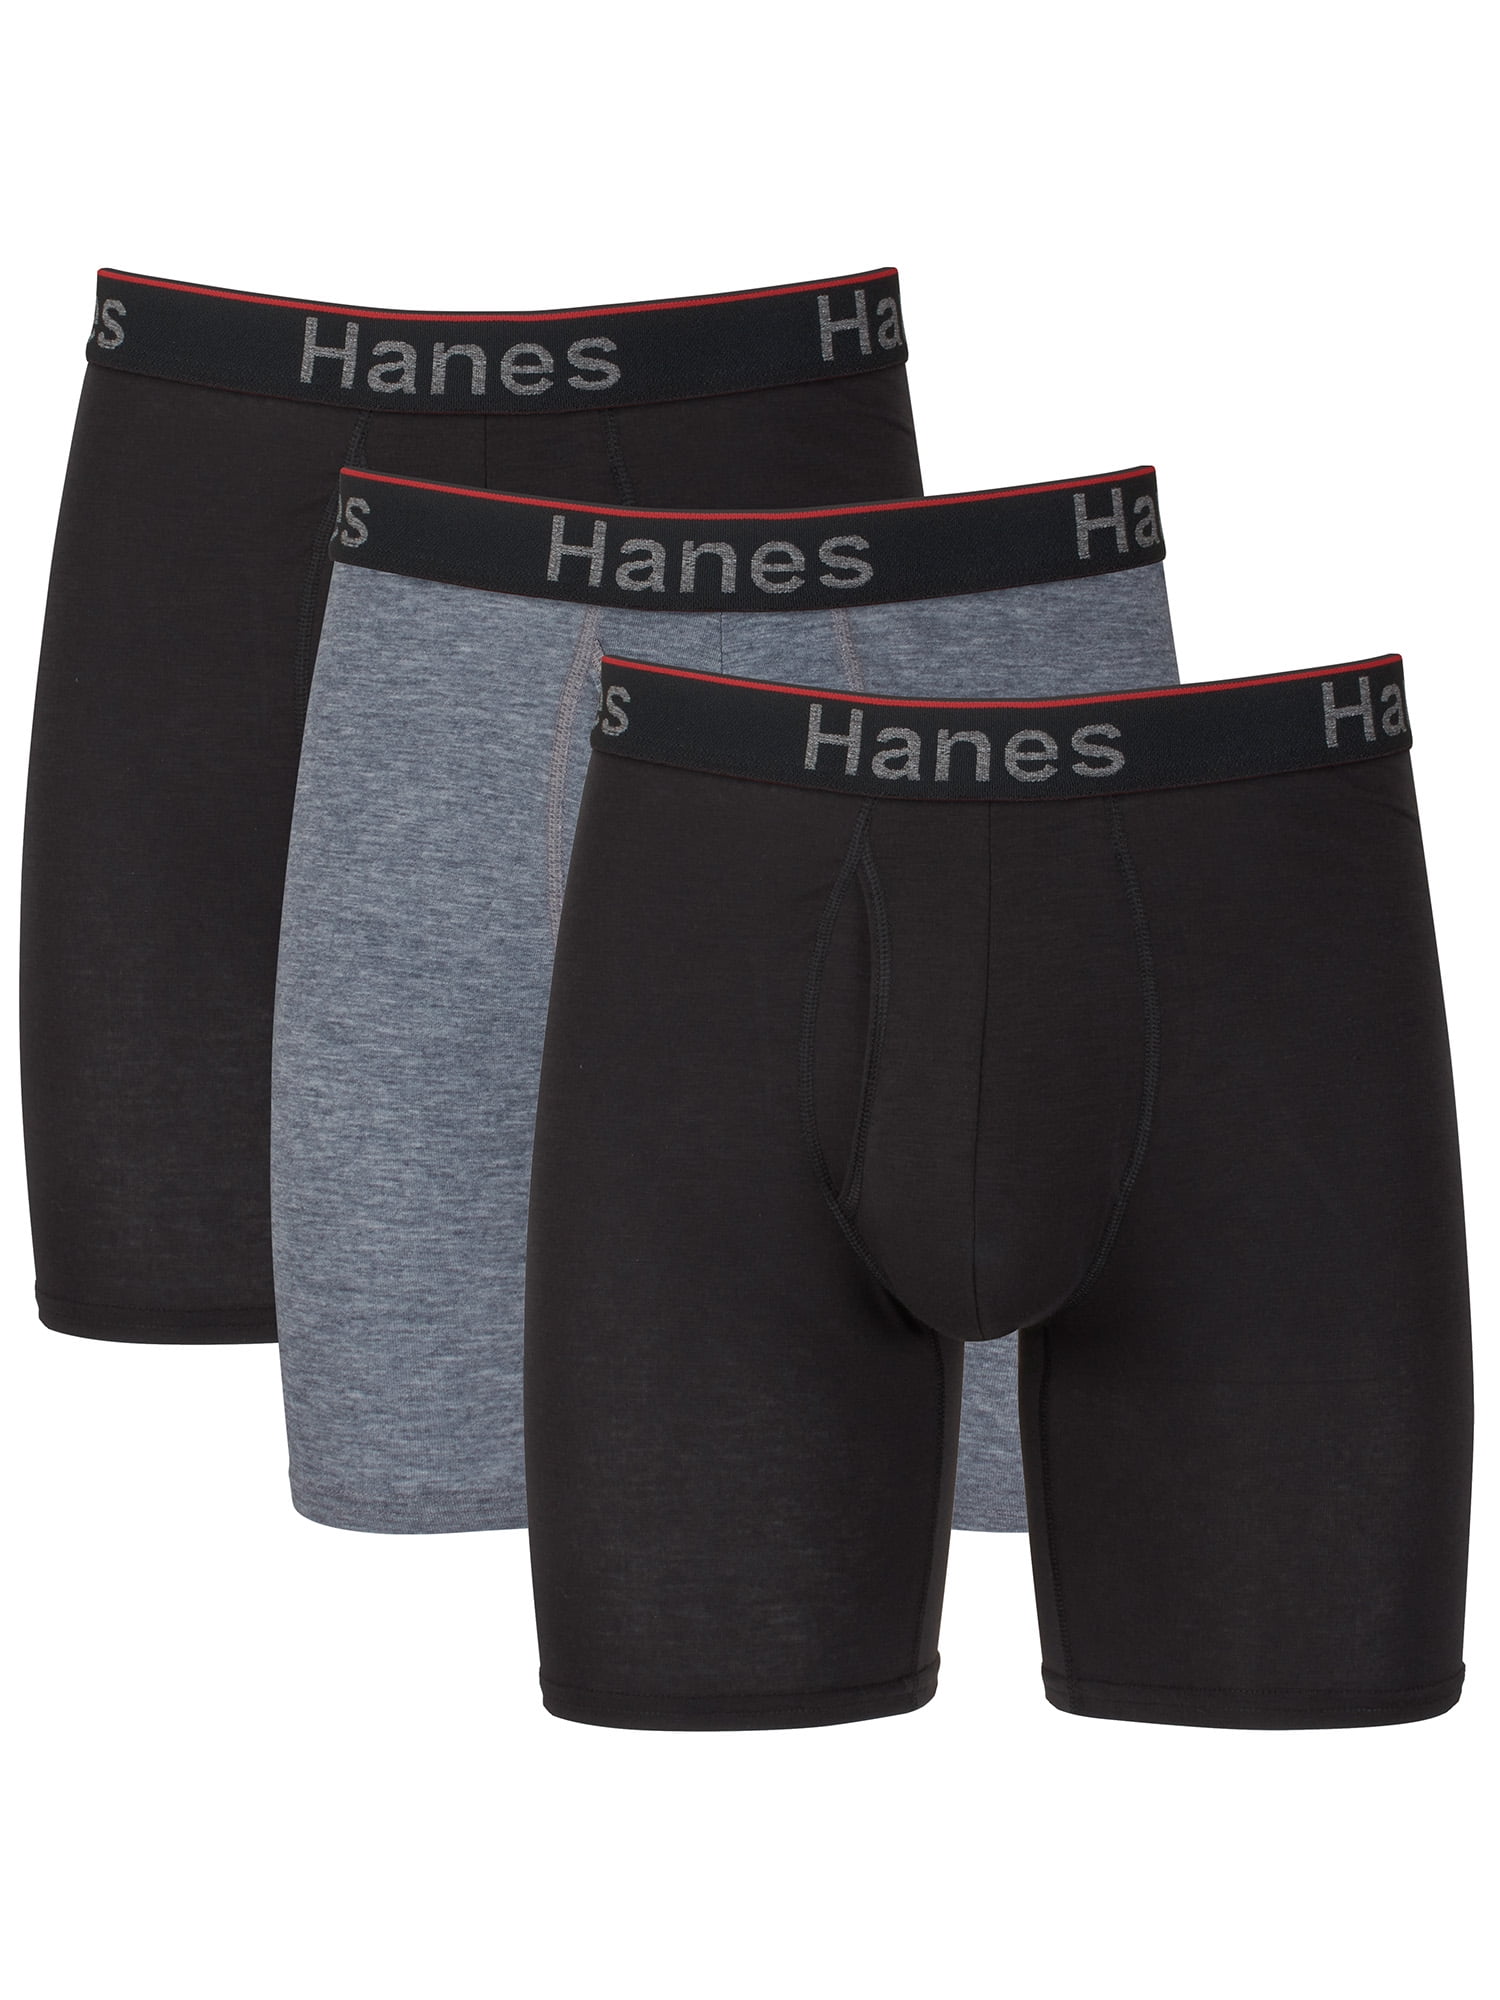 Hanes Comfortblend Mens 4 Pack Boxer Briefs, Color: Black Grey